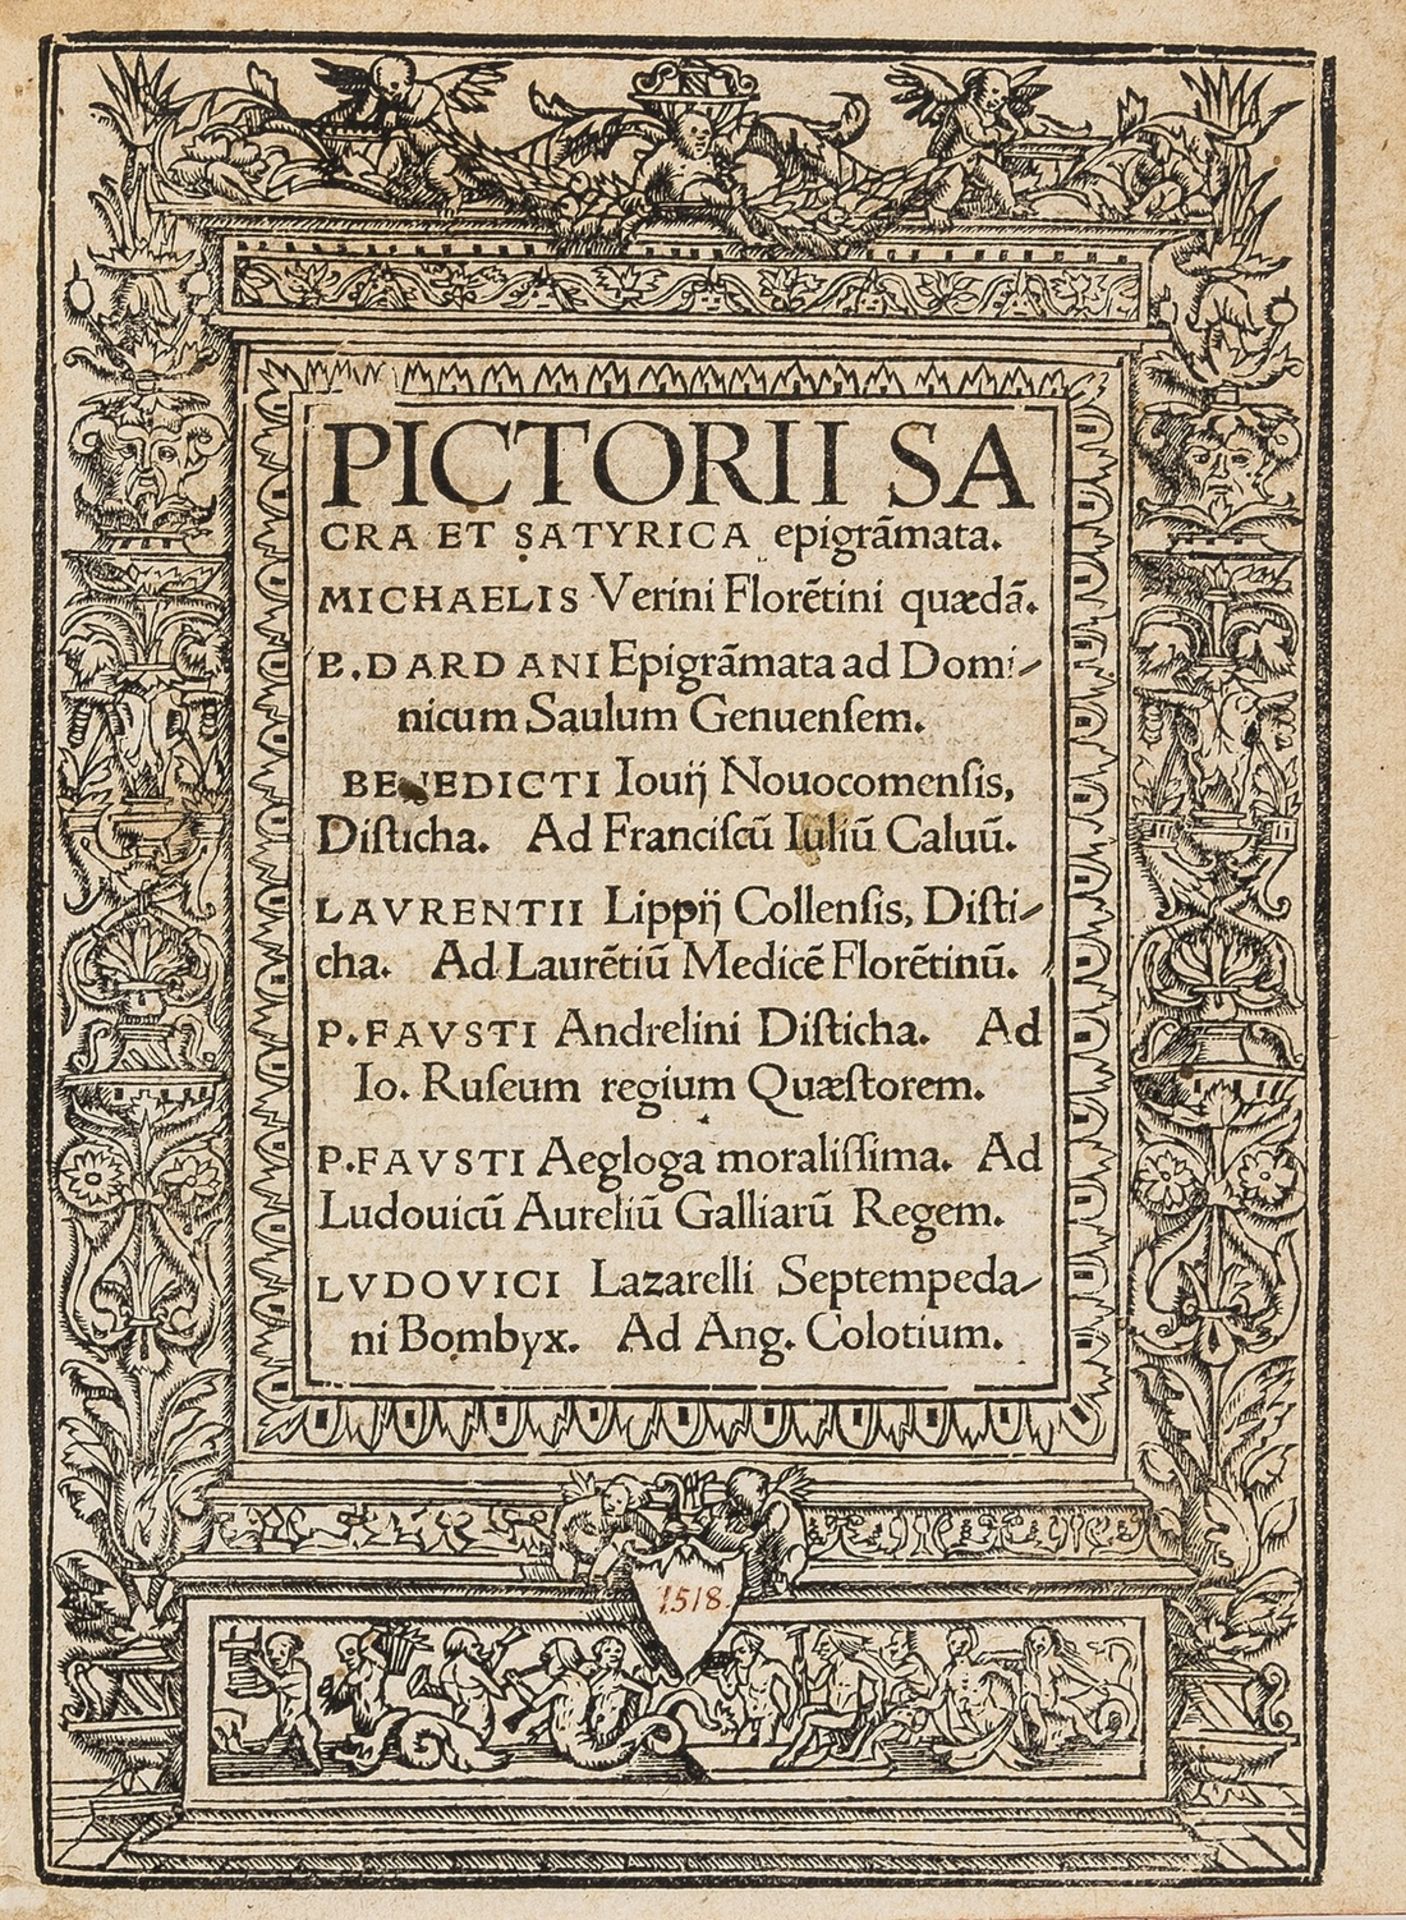 Bigi (Luigi), "Pittorio". Pictorii sacra et satyrica epigrammata, Basel, Johann Froben, 1518.